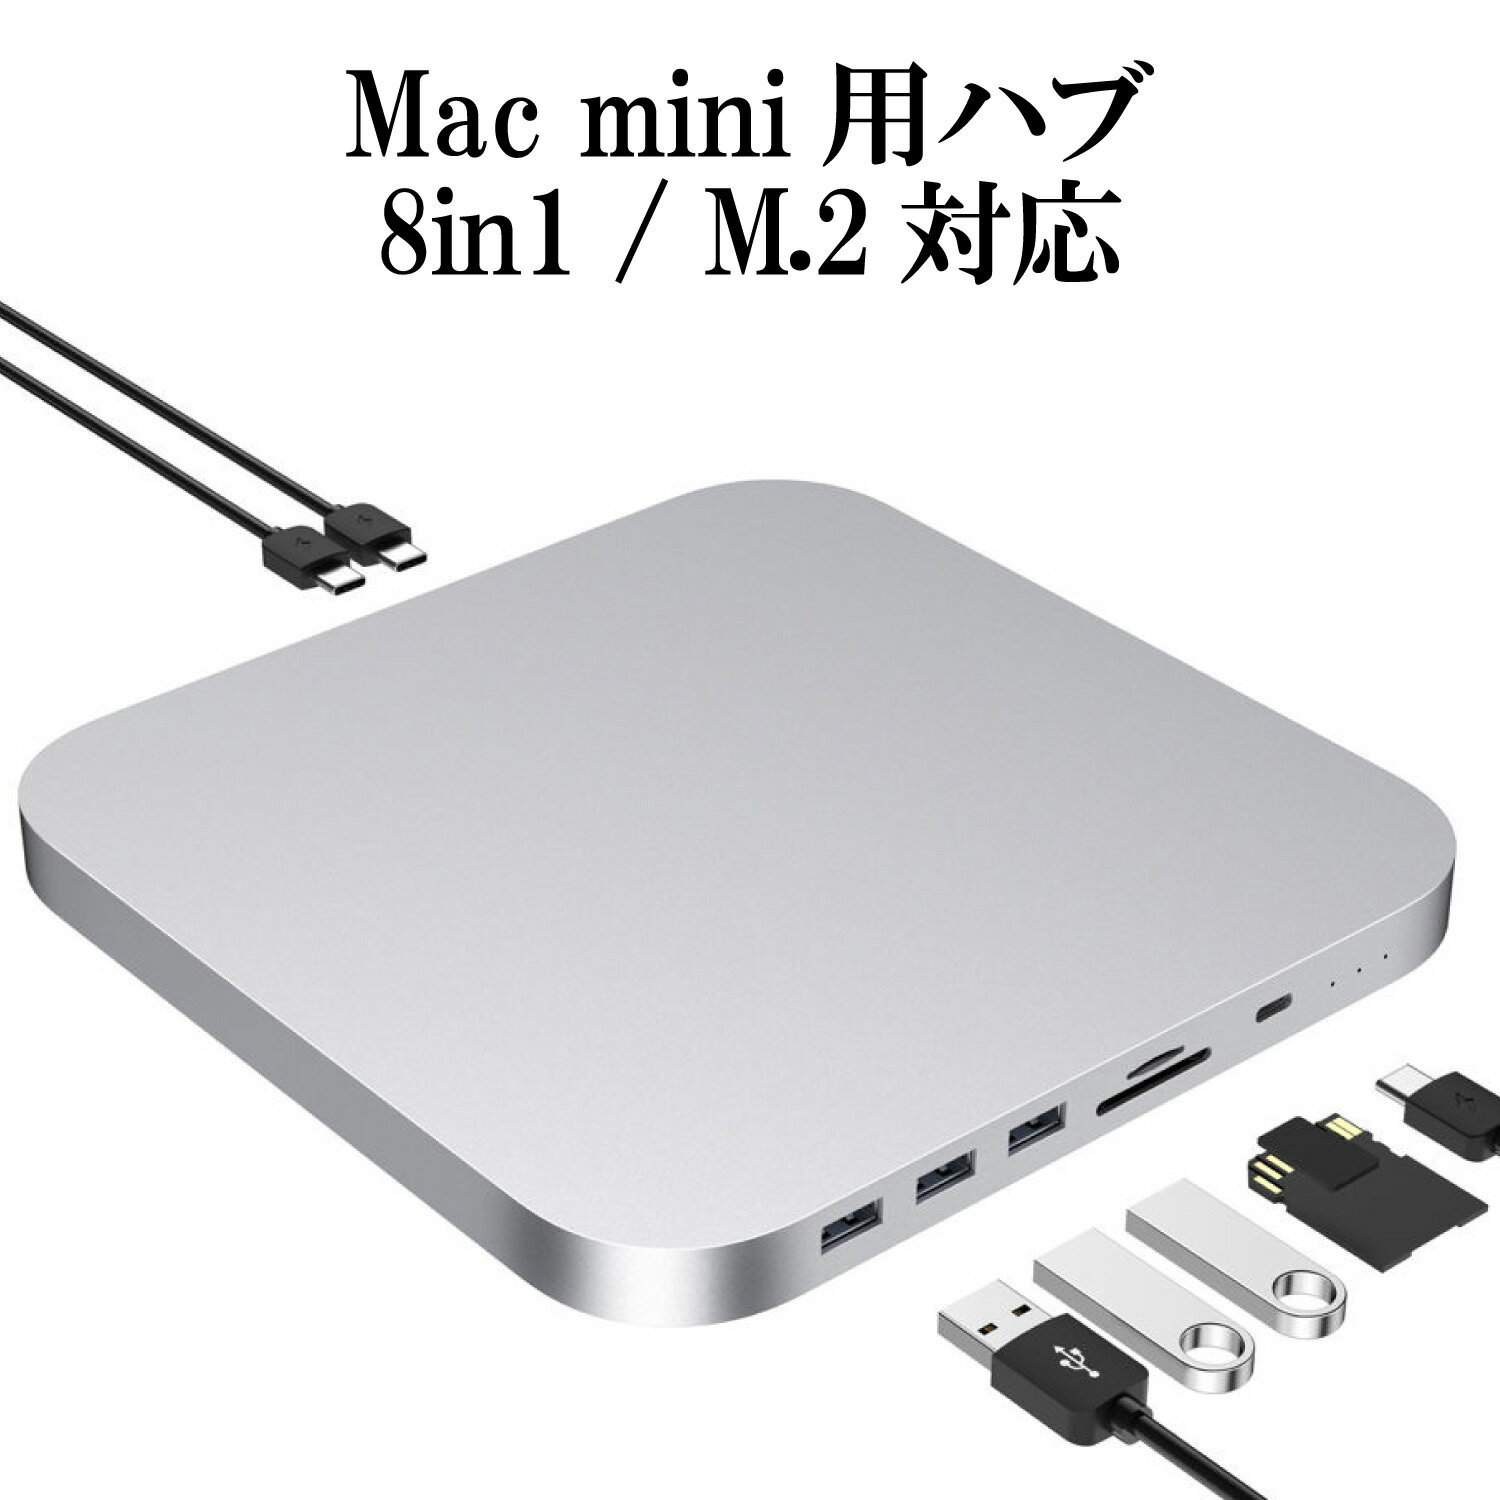 Mac mini ドッキングステーション ( 8in